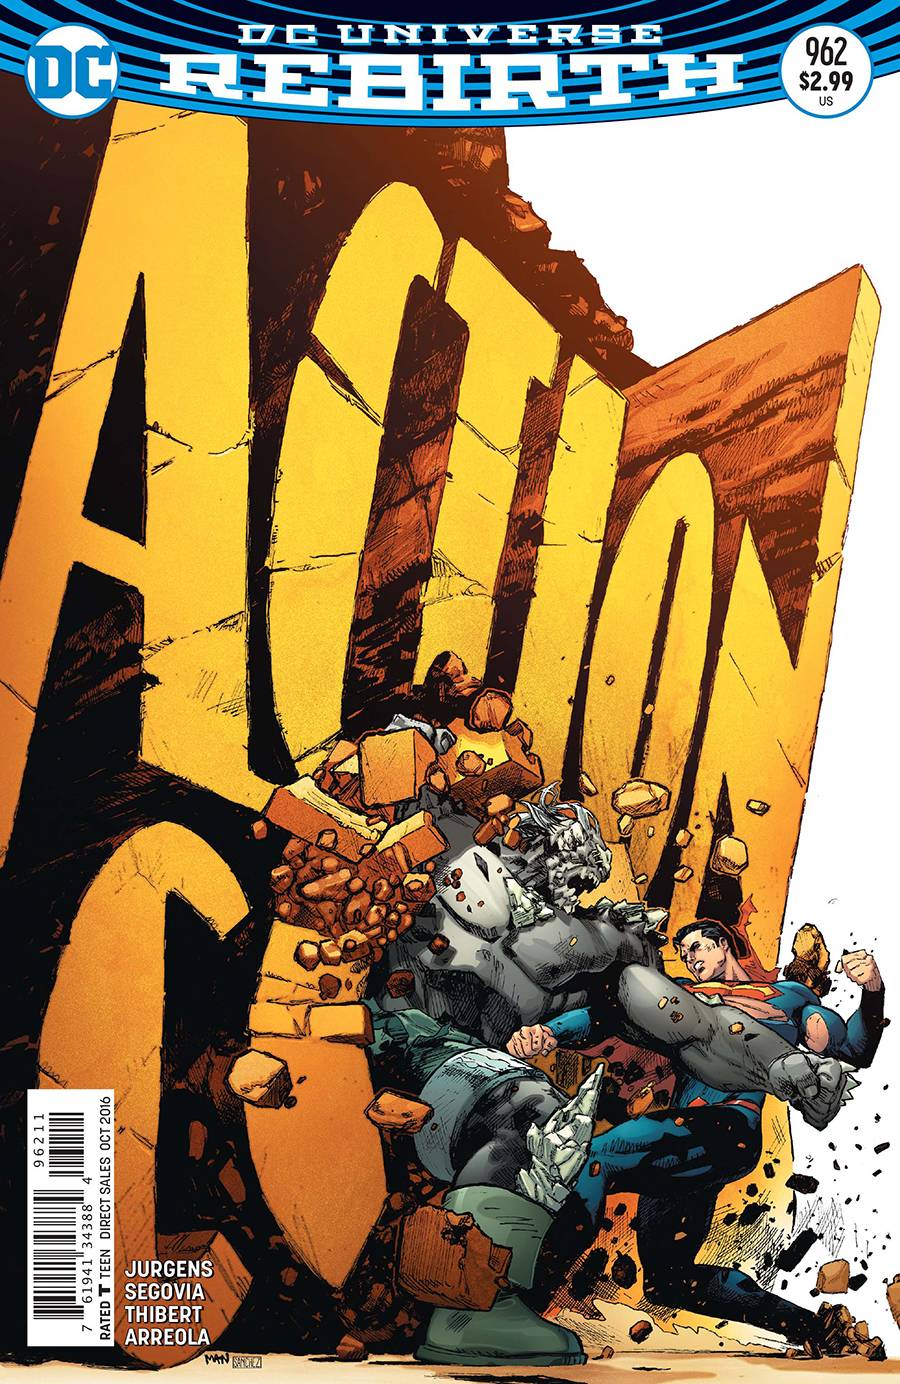 Action Comics 962 Comic Book